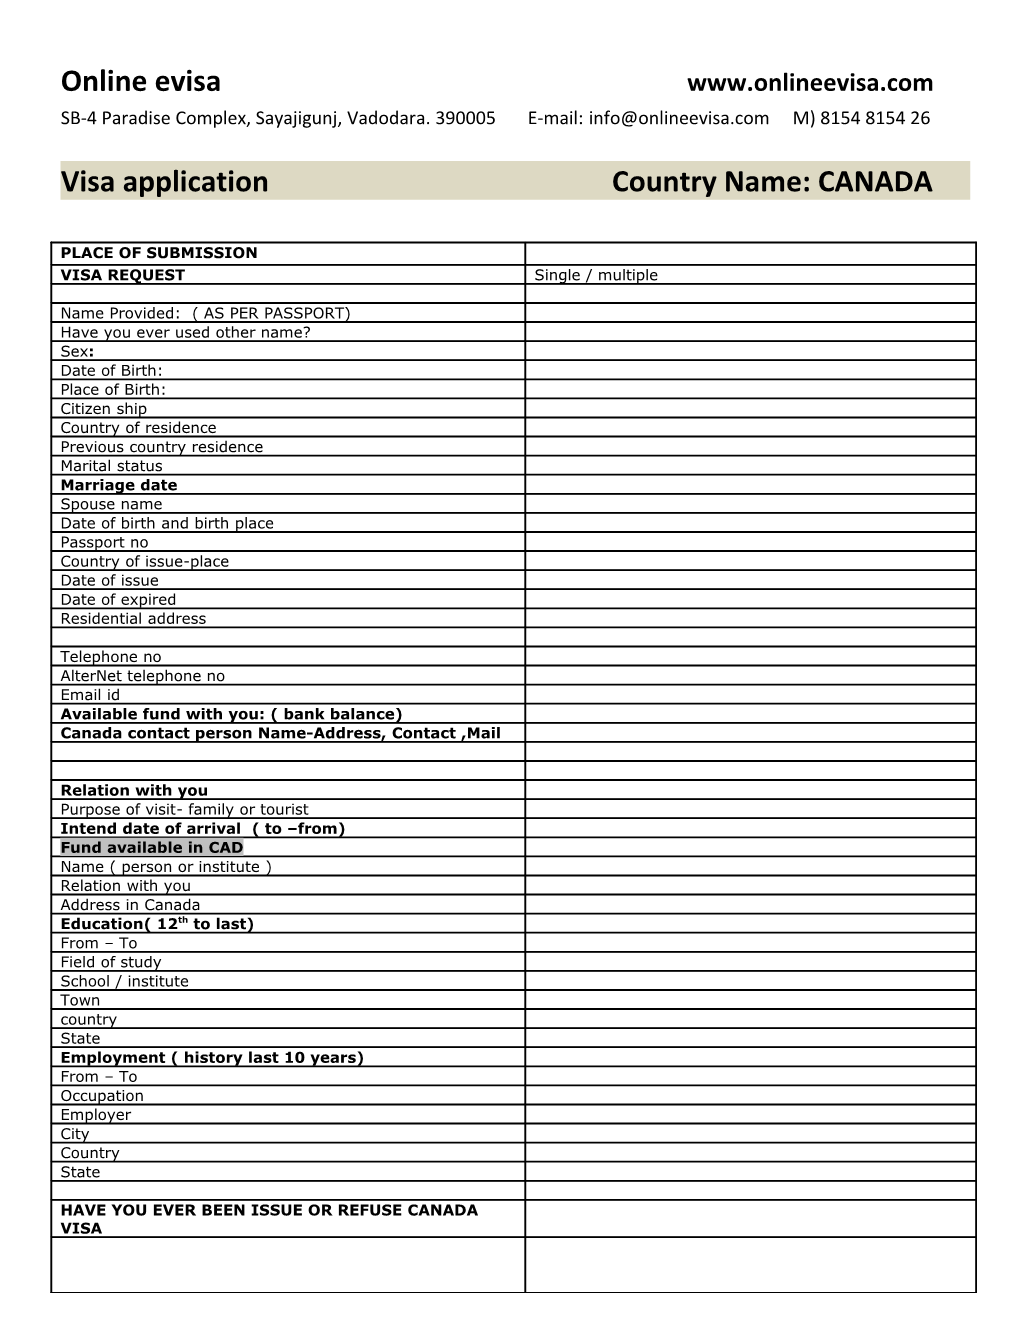 Visa Application Country Name: CANADA